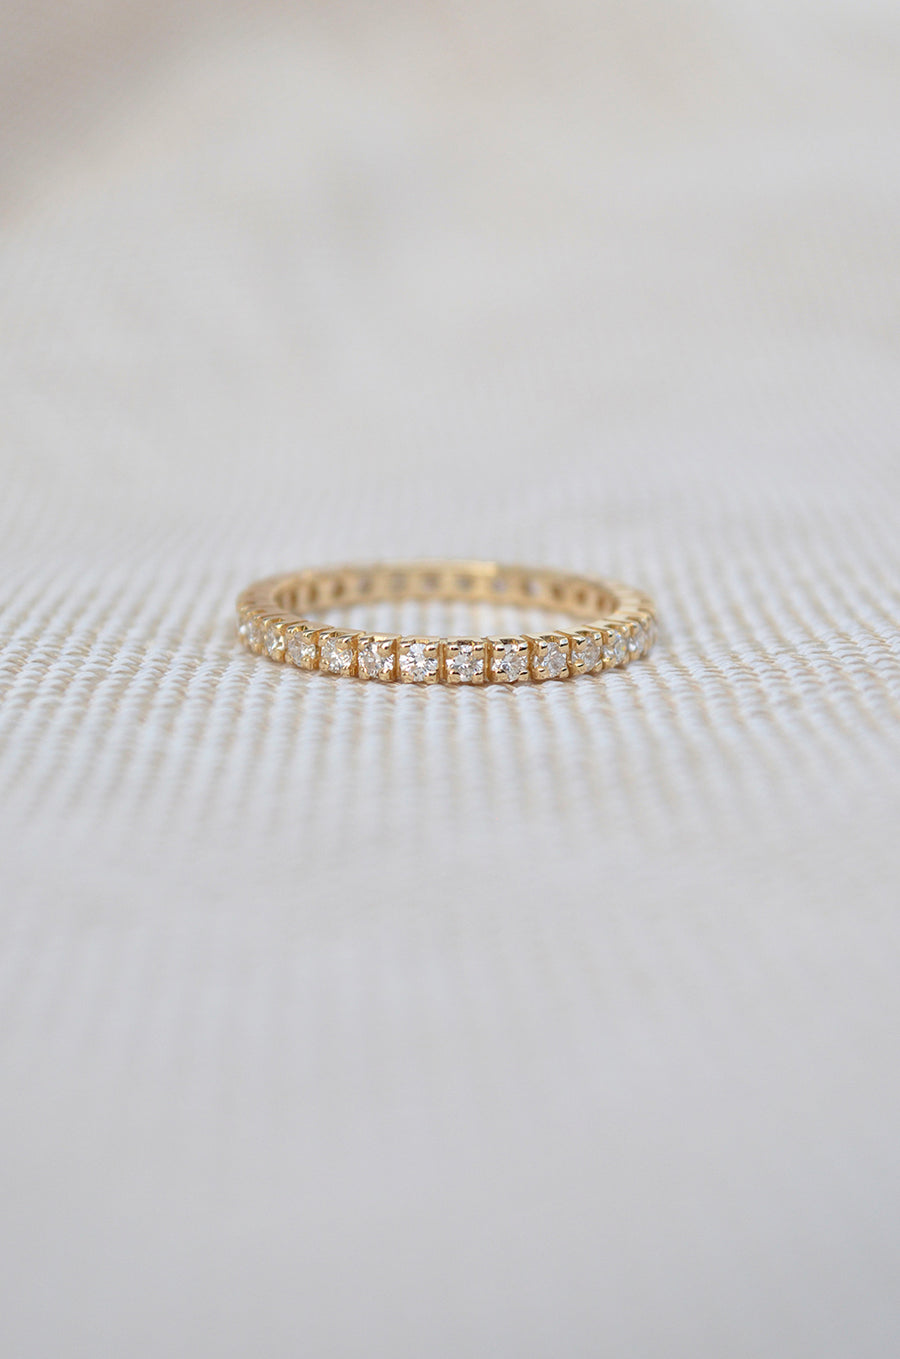 Laps Around The Sun Ring - Gold 14k & Re-used Diamonds